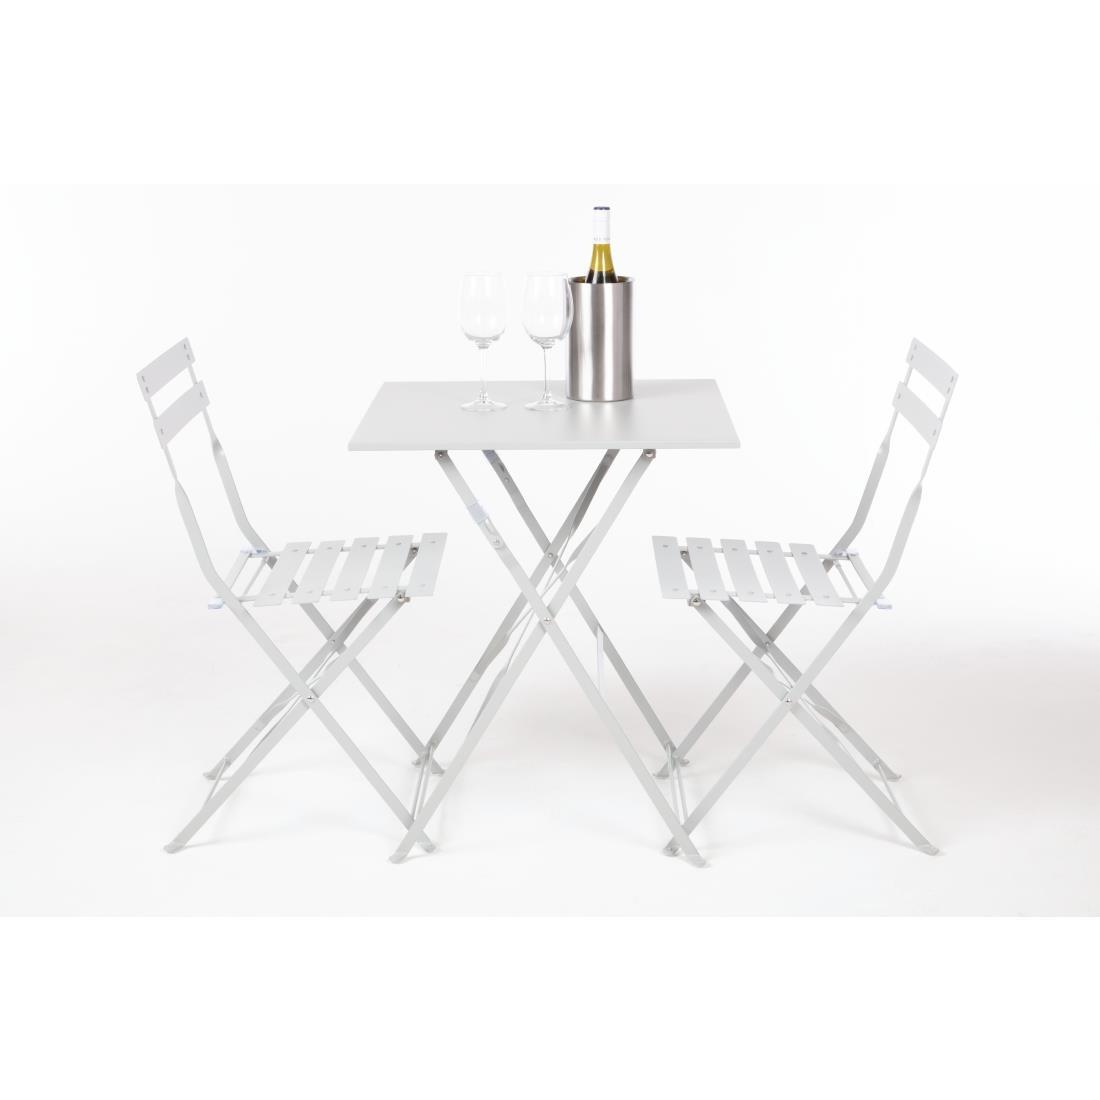 Bolero Steel Pavement StyleFolding Chairs Grey (Pack of 2) - GH551  - 7